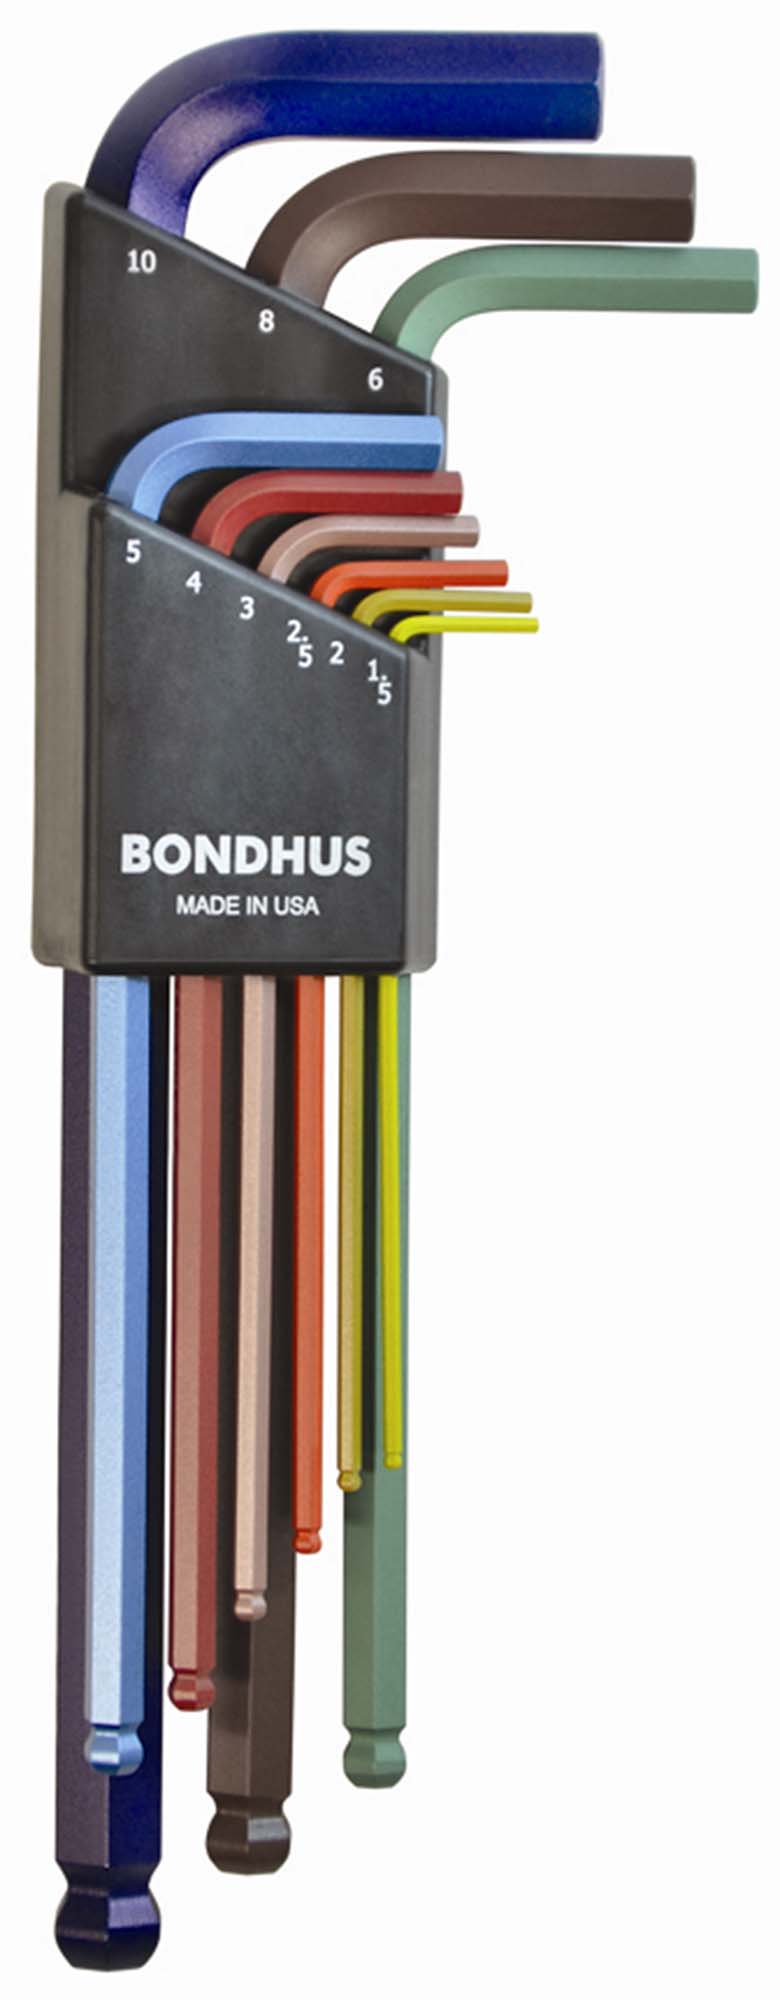 Bondhus 69499 1.5-10mm ColorGuard L-Wrench Ball End Metric Hex Hey Set, Set of 9 - Long